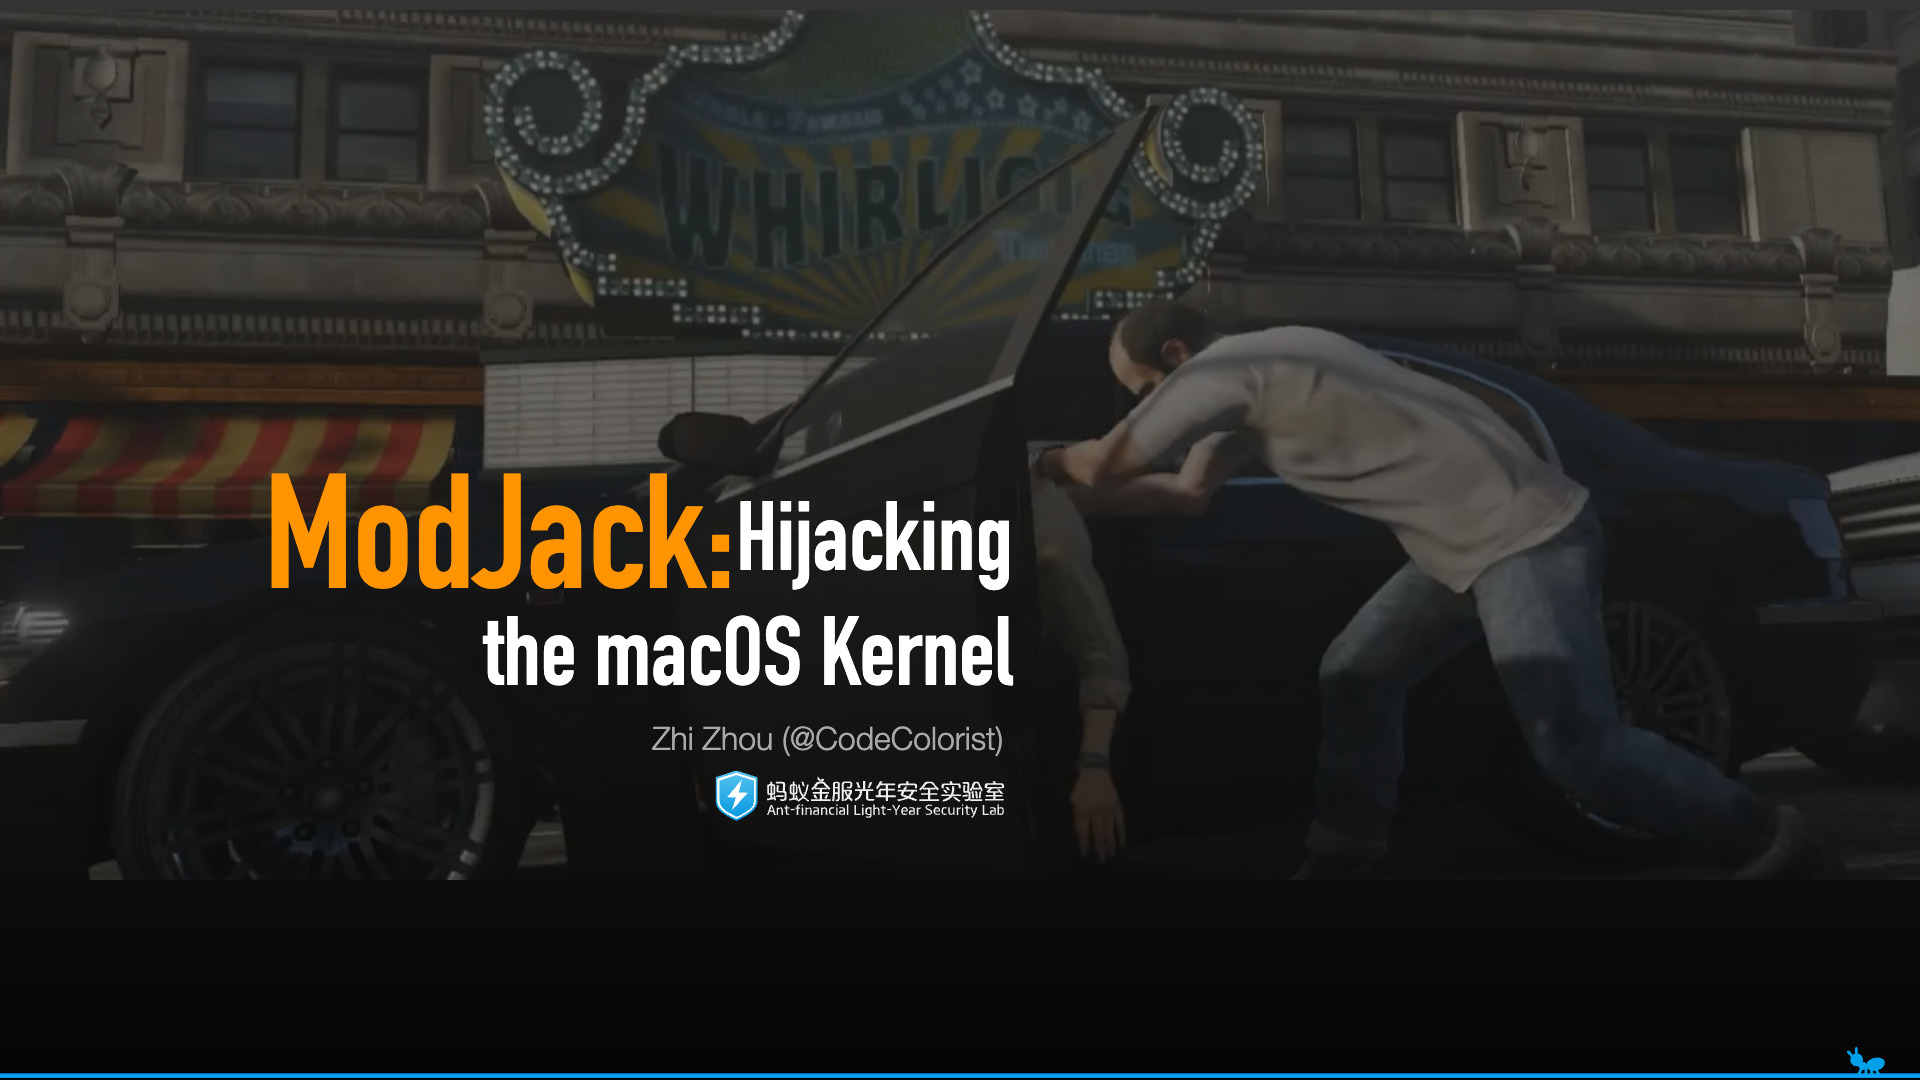 ModJack: Hijacking the macOS Kernel (HITB Ams 2019)